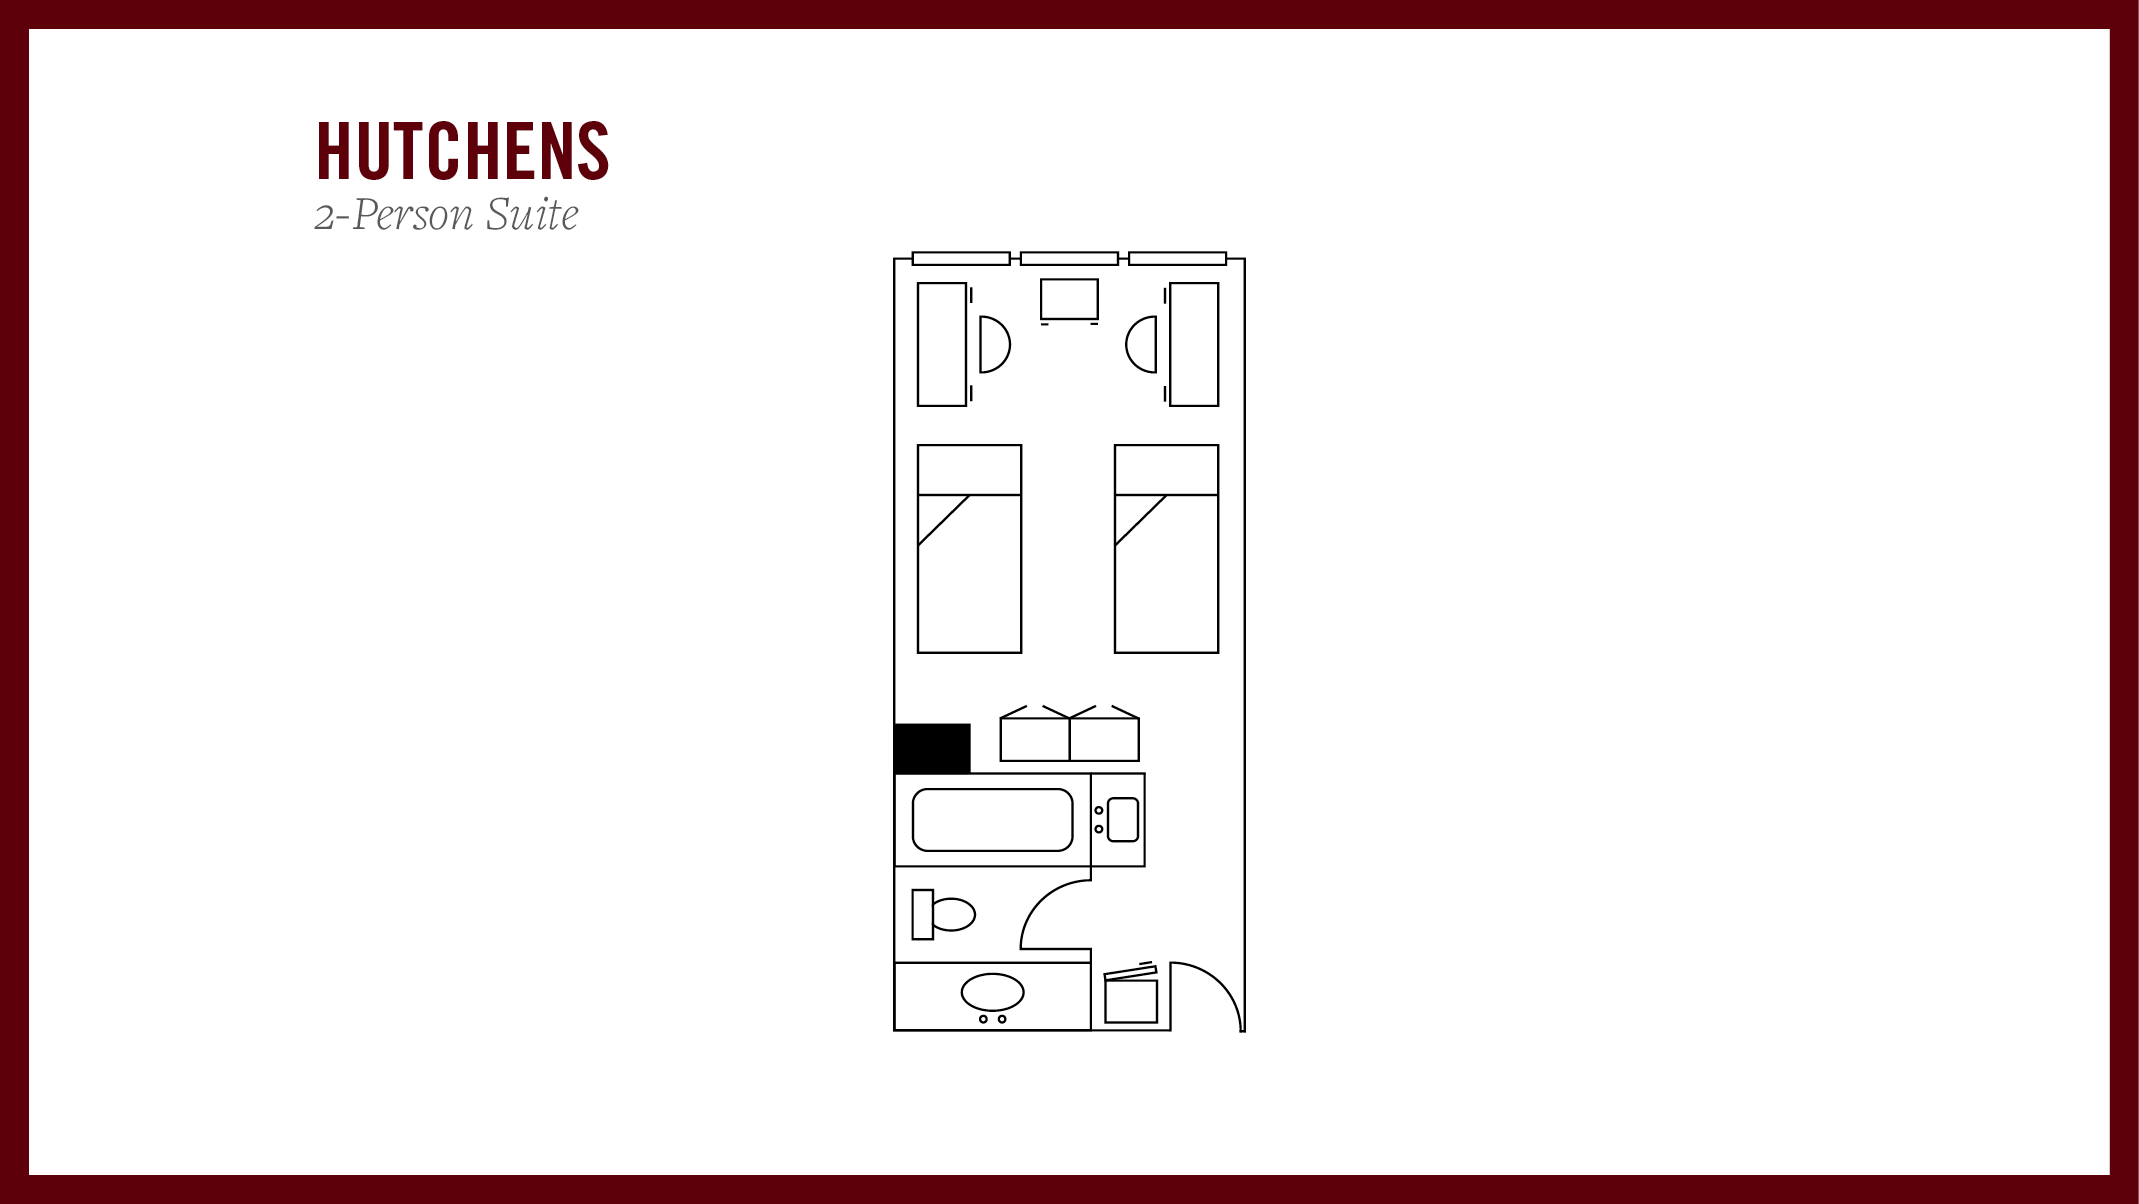 Hutchens House 2-person suite layout